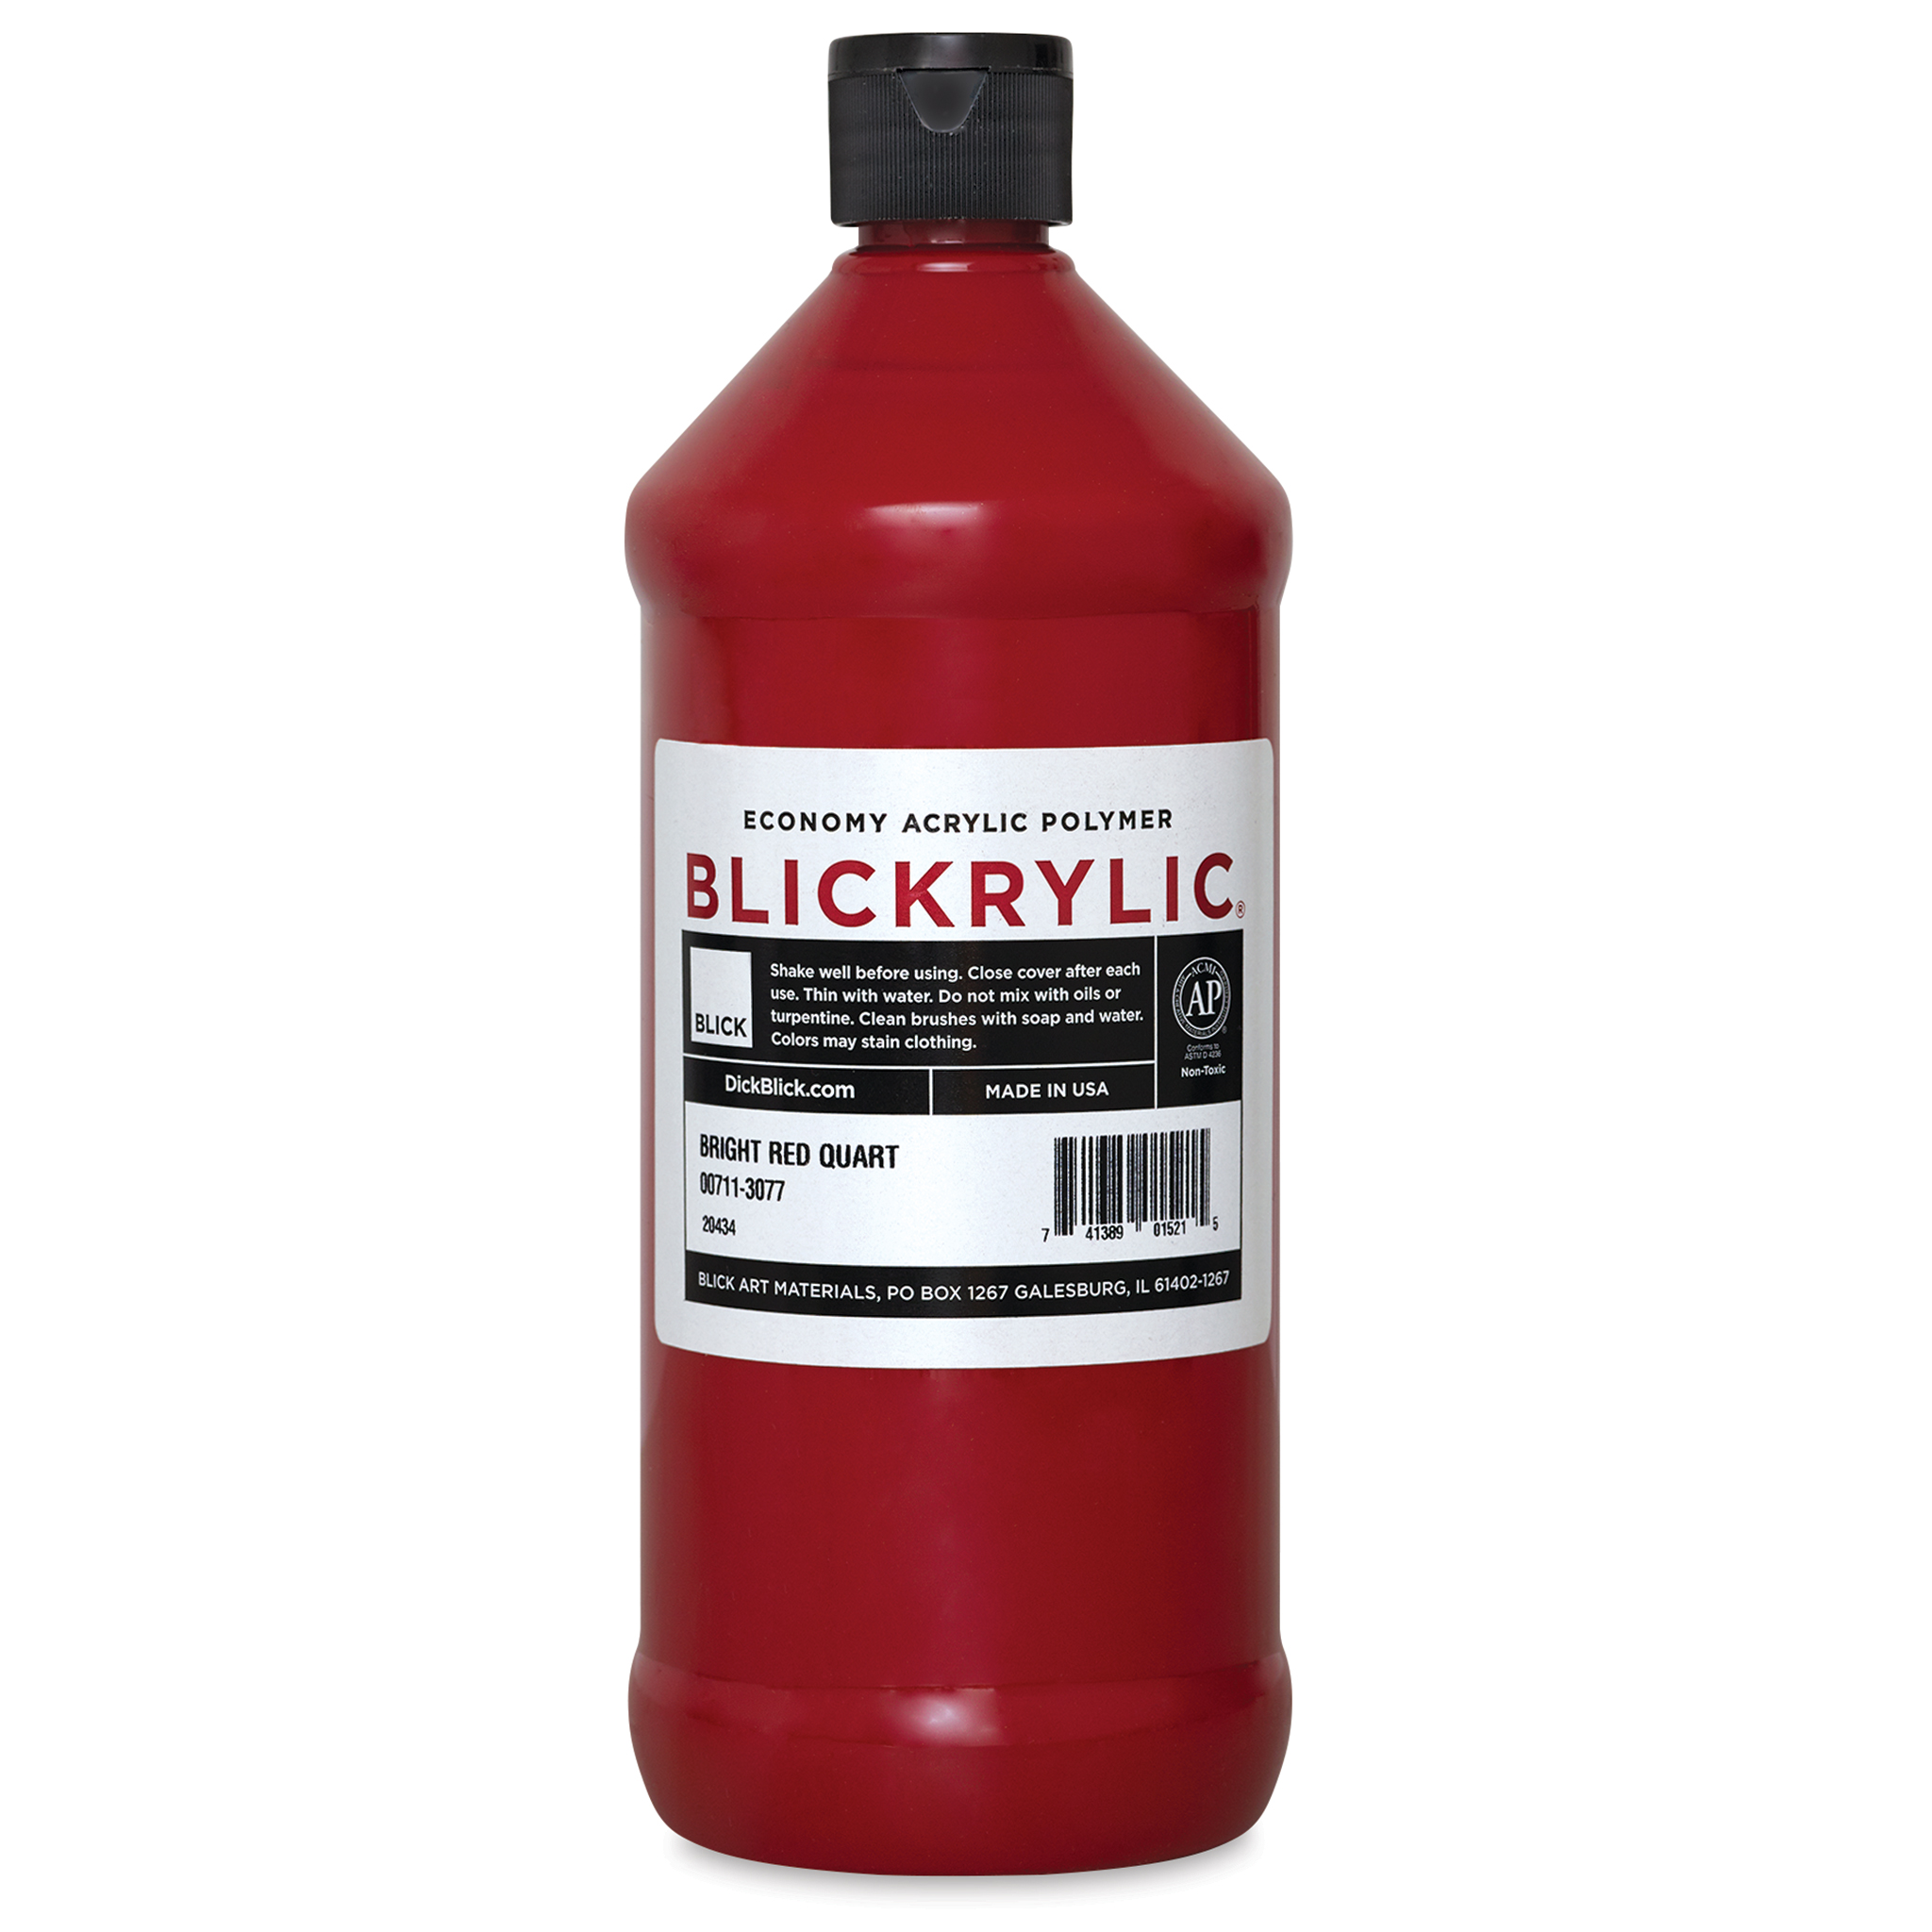 Blick Blickrylic Acrylic Polymer Paint 4 fl oz. (120ml) Primary